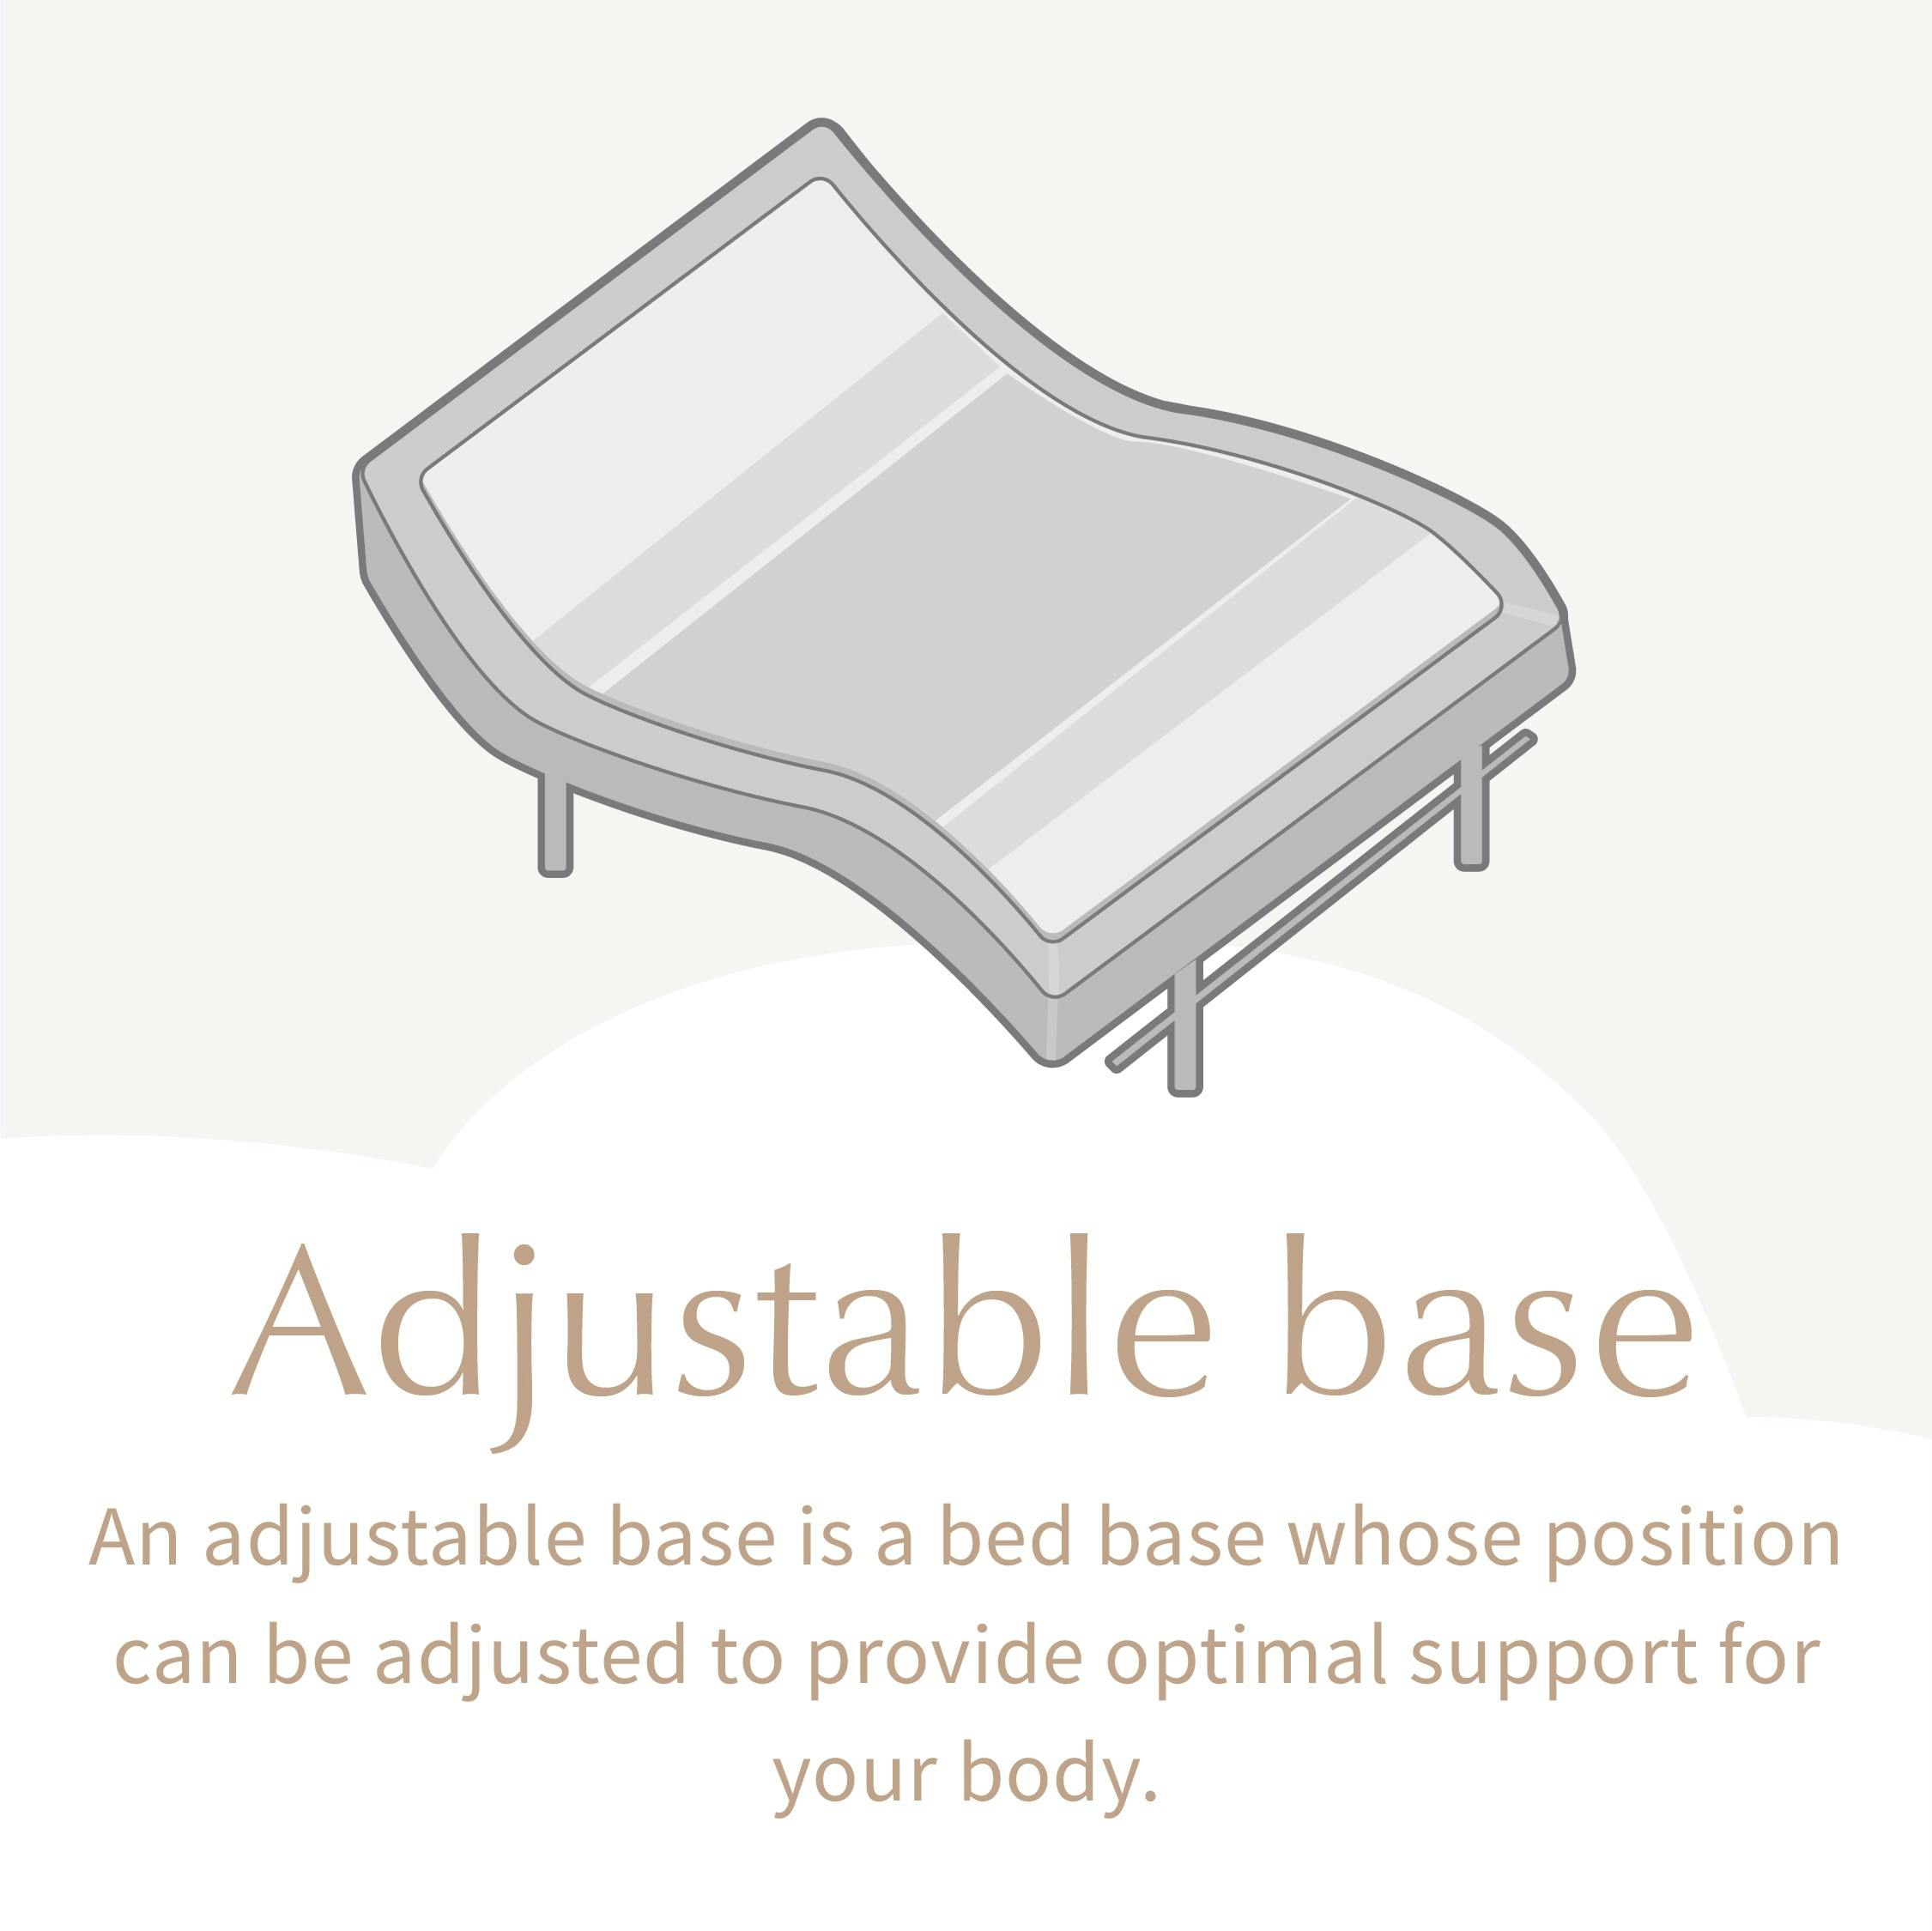 Illustration of an adjustable base with description underneath: 